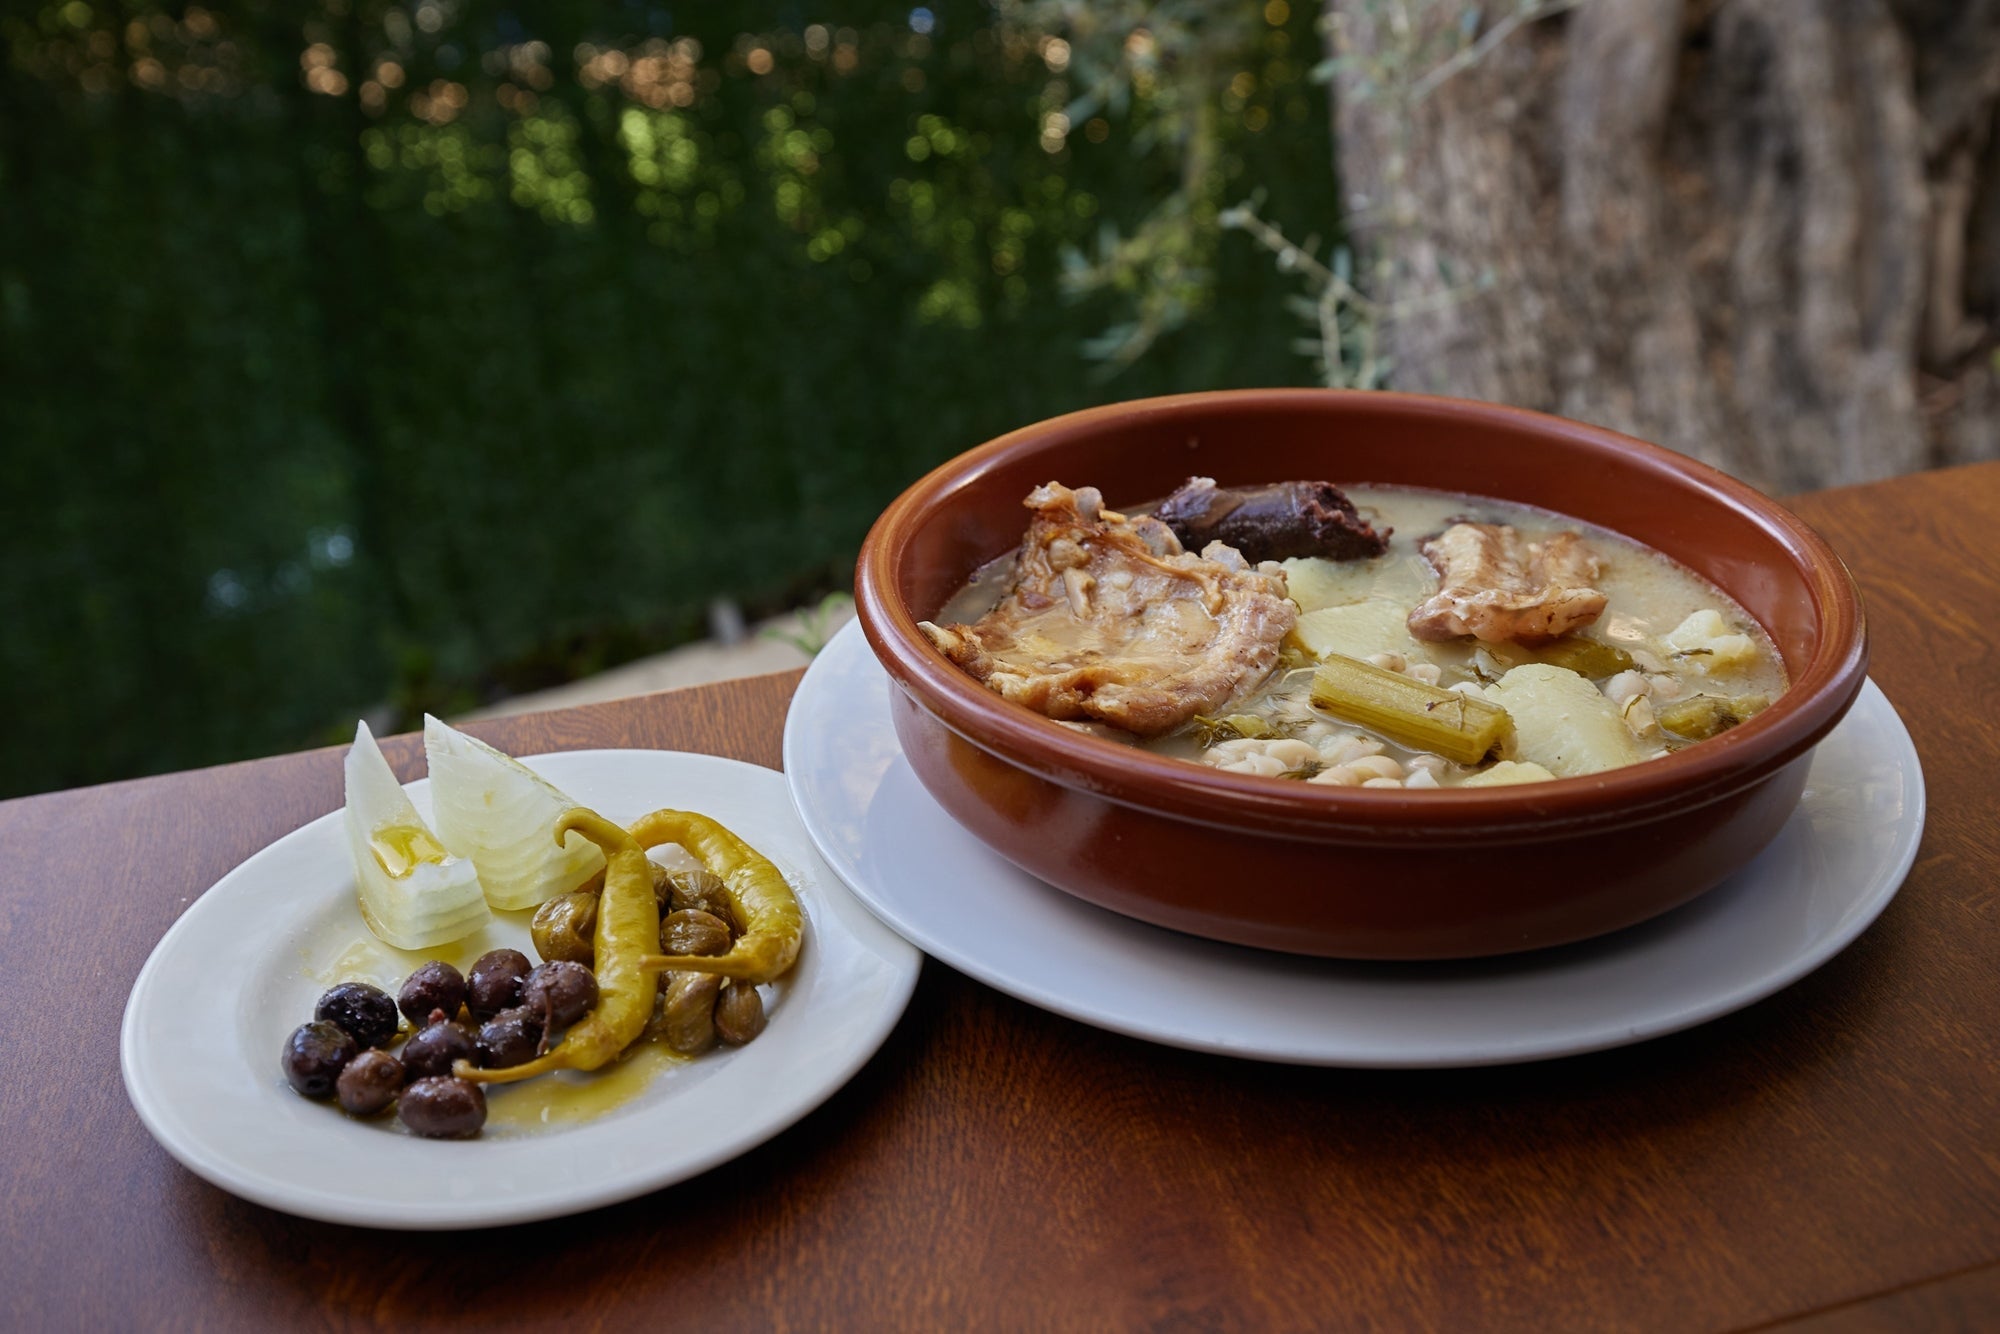 Comida típica de Granada. 11 platos que saben a tradición | Guía Repsol